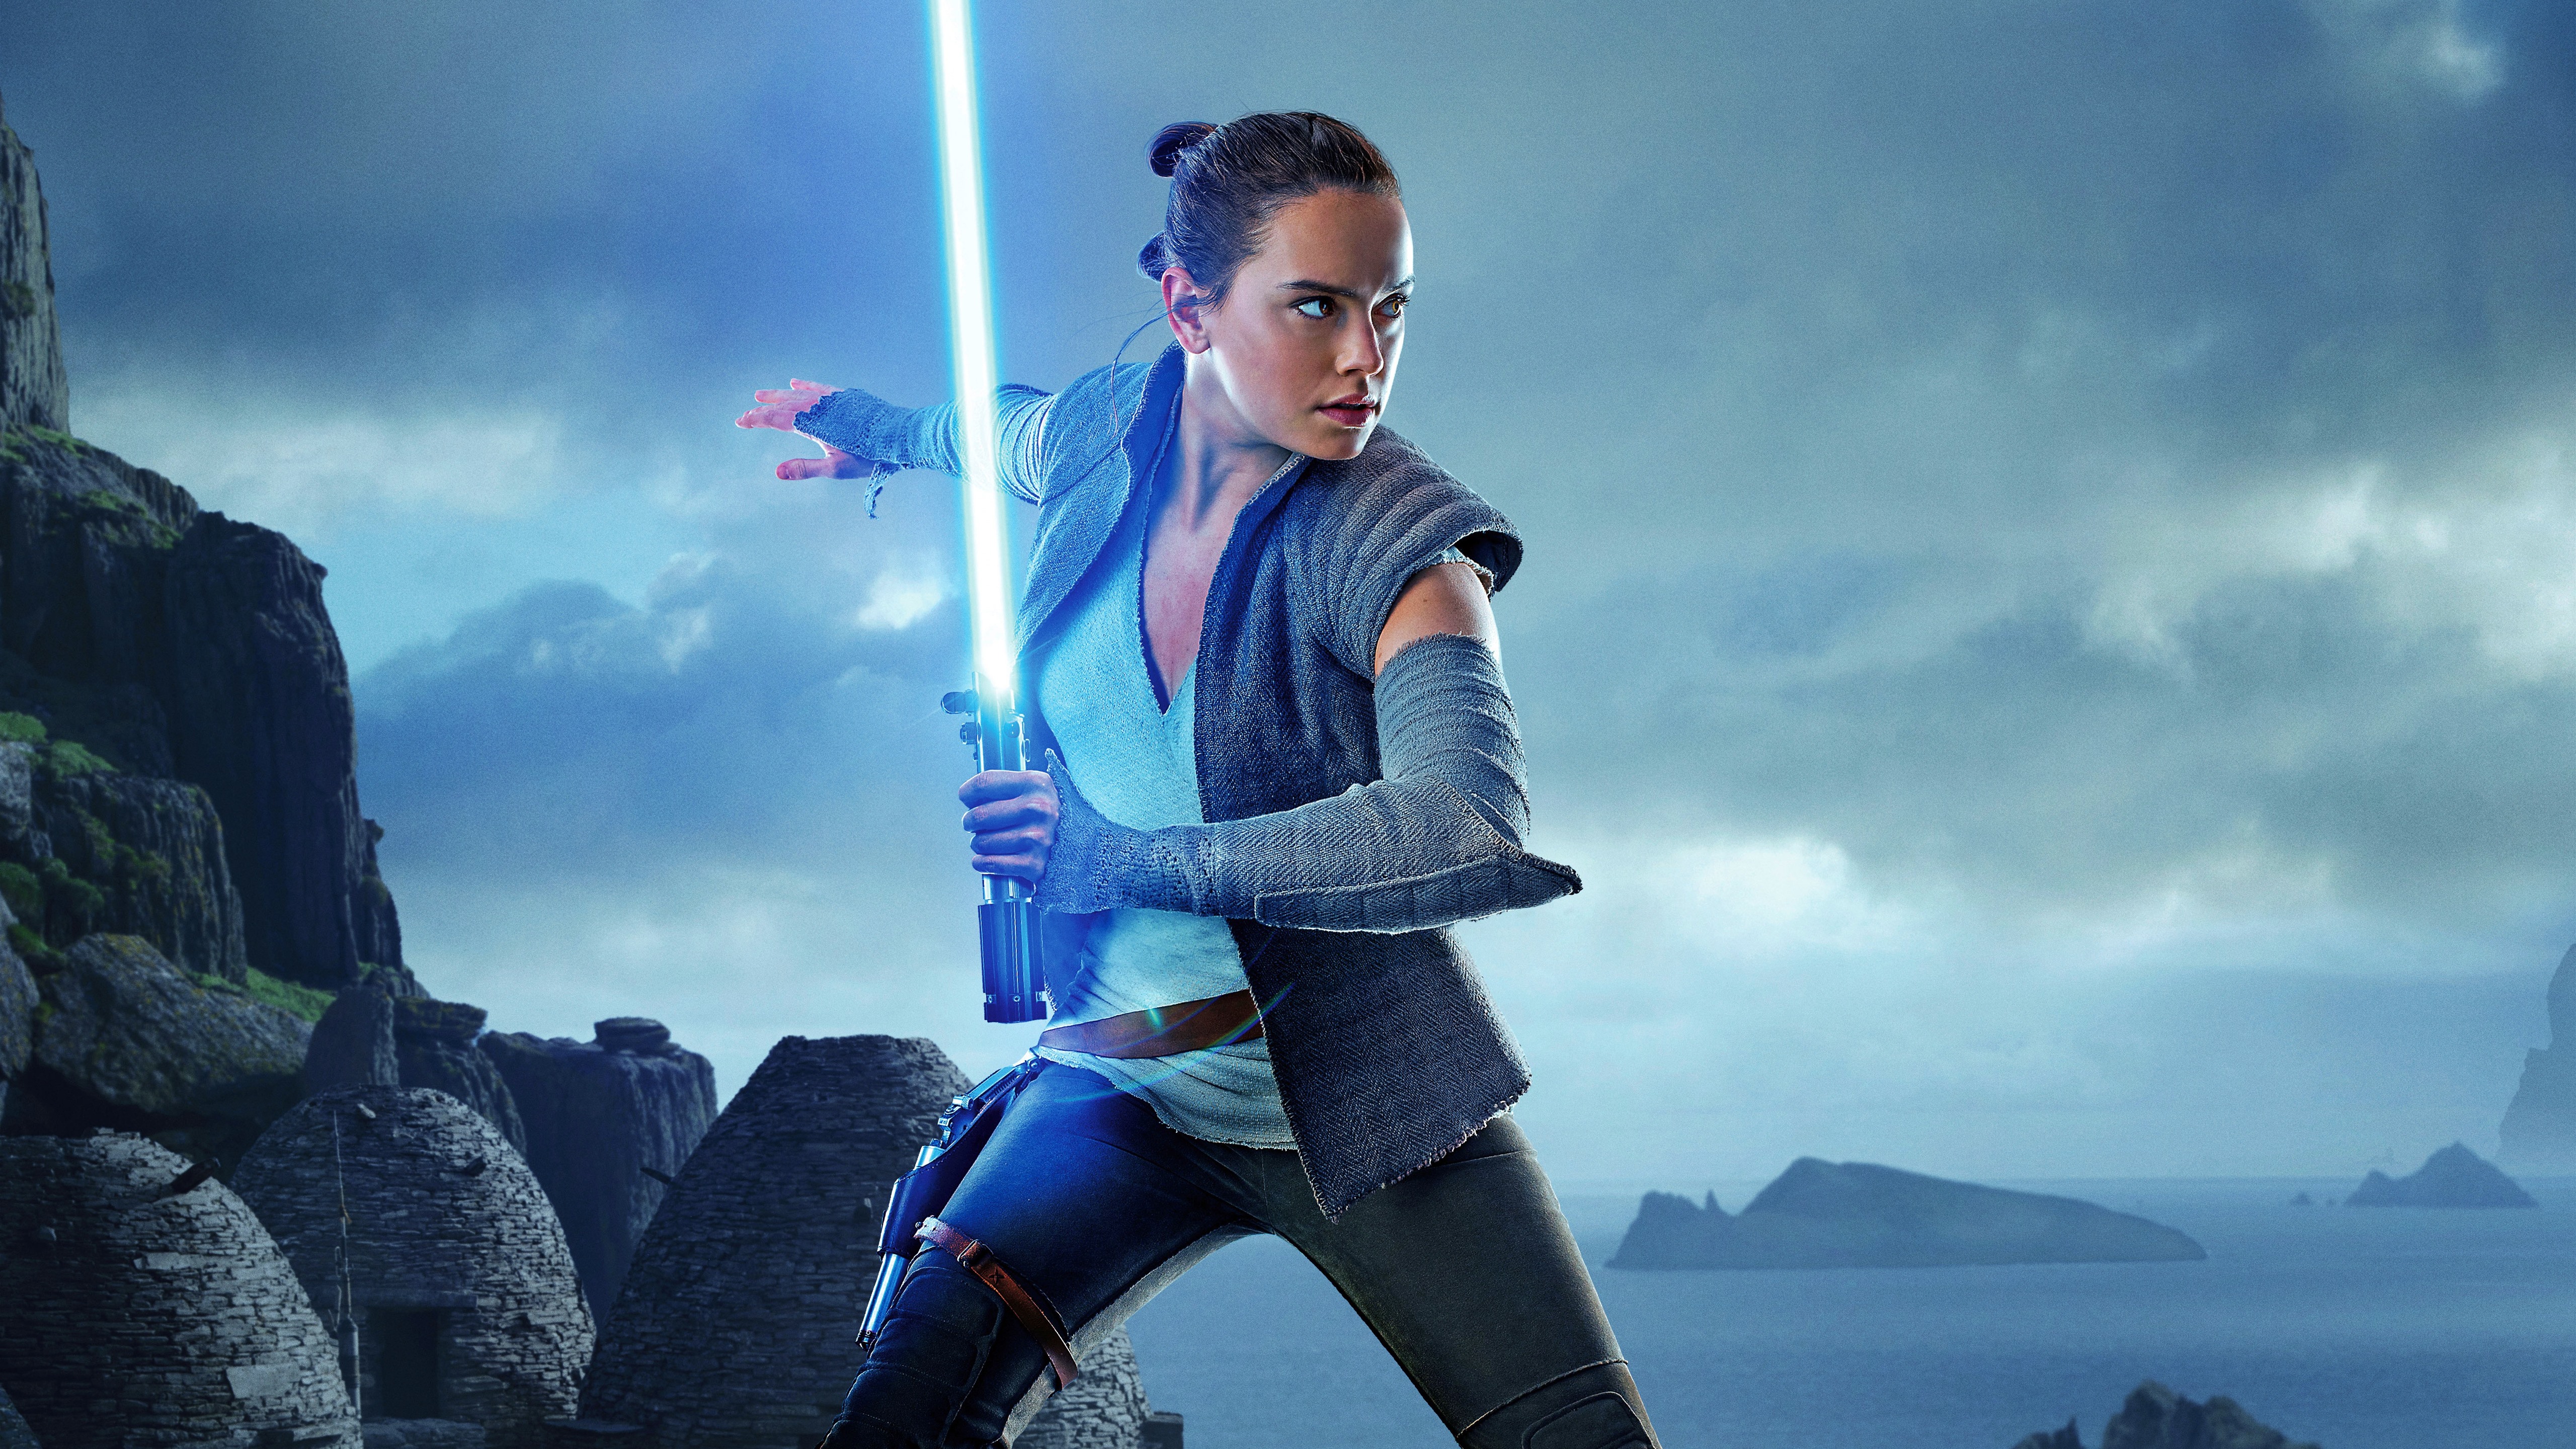 Wallpaper Star Wars: The Last Jedi, girl, laser sword 5120x2880 UHD 5K Picture, Image